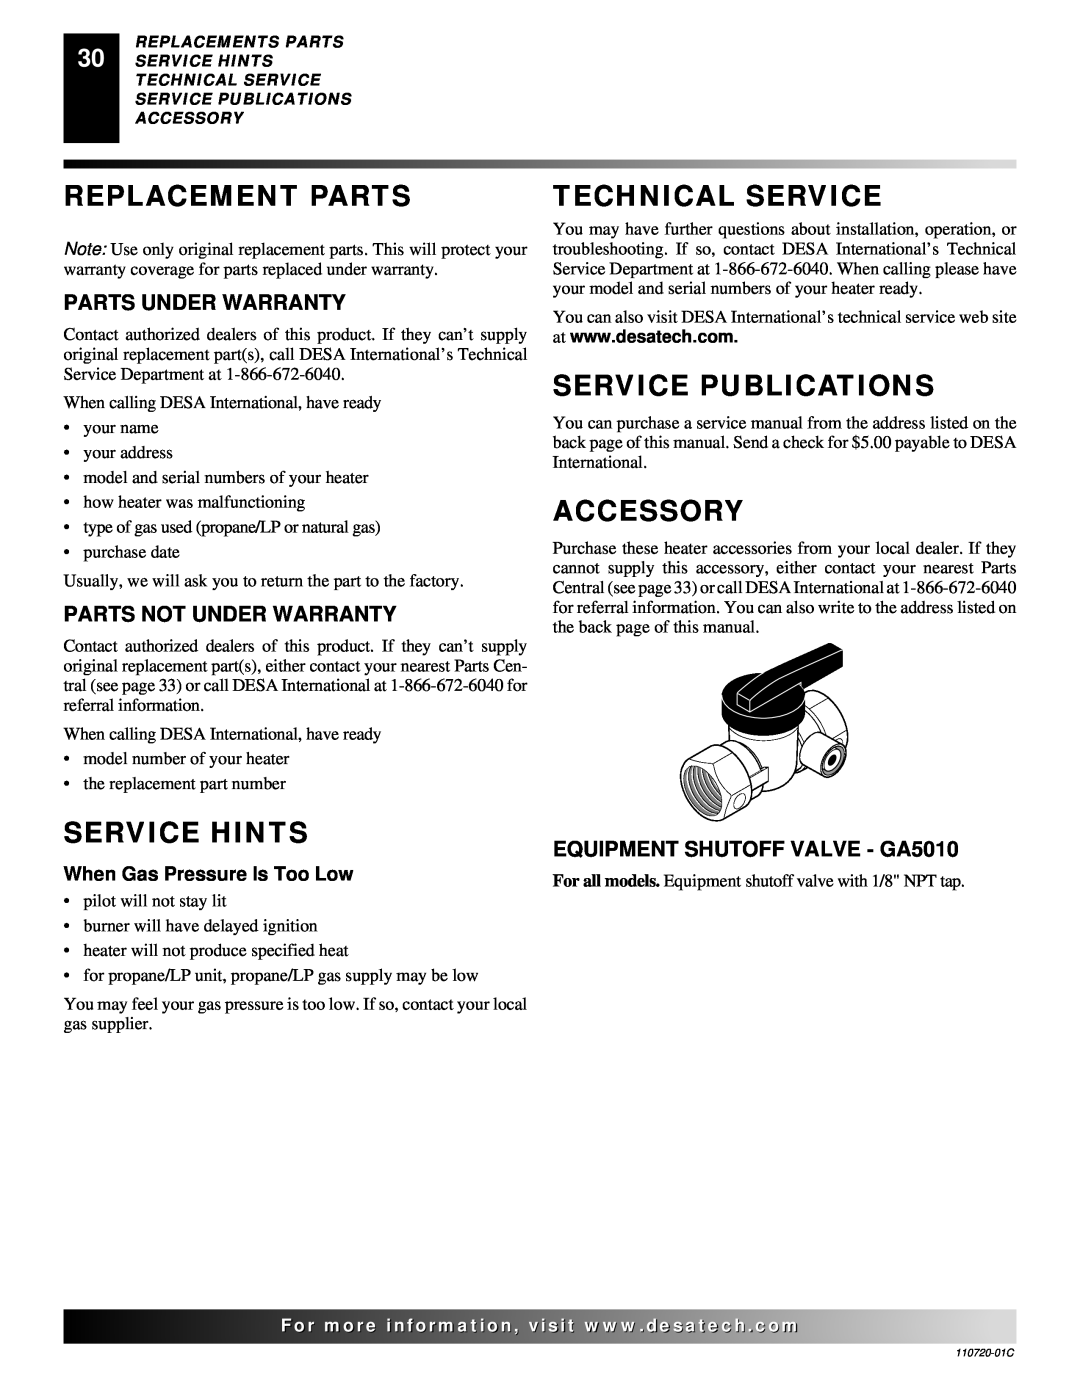 Desa VN10A Replacement Parts, Technical Service, Service Publications, Service Hints, Accessory, Parts Under Warranty 